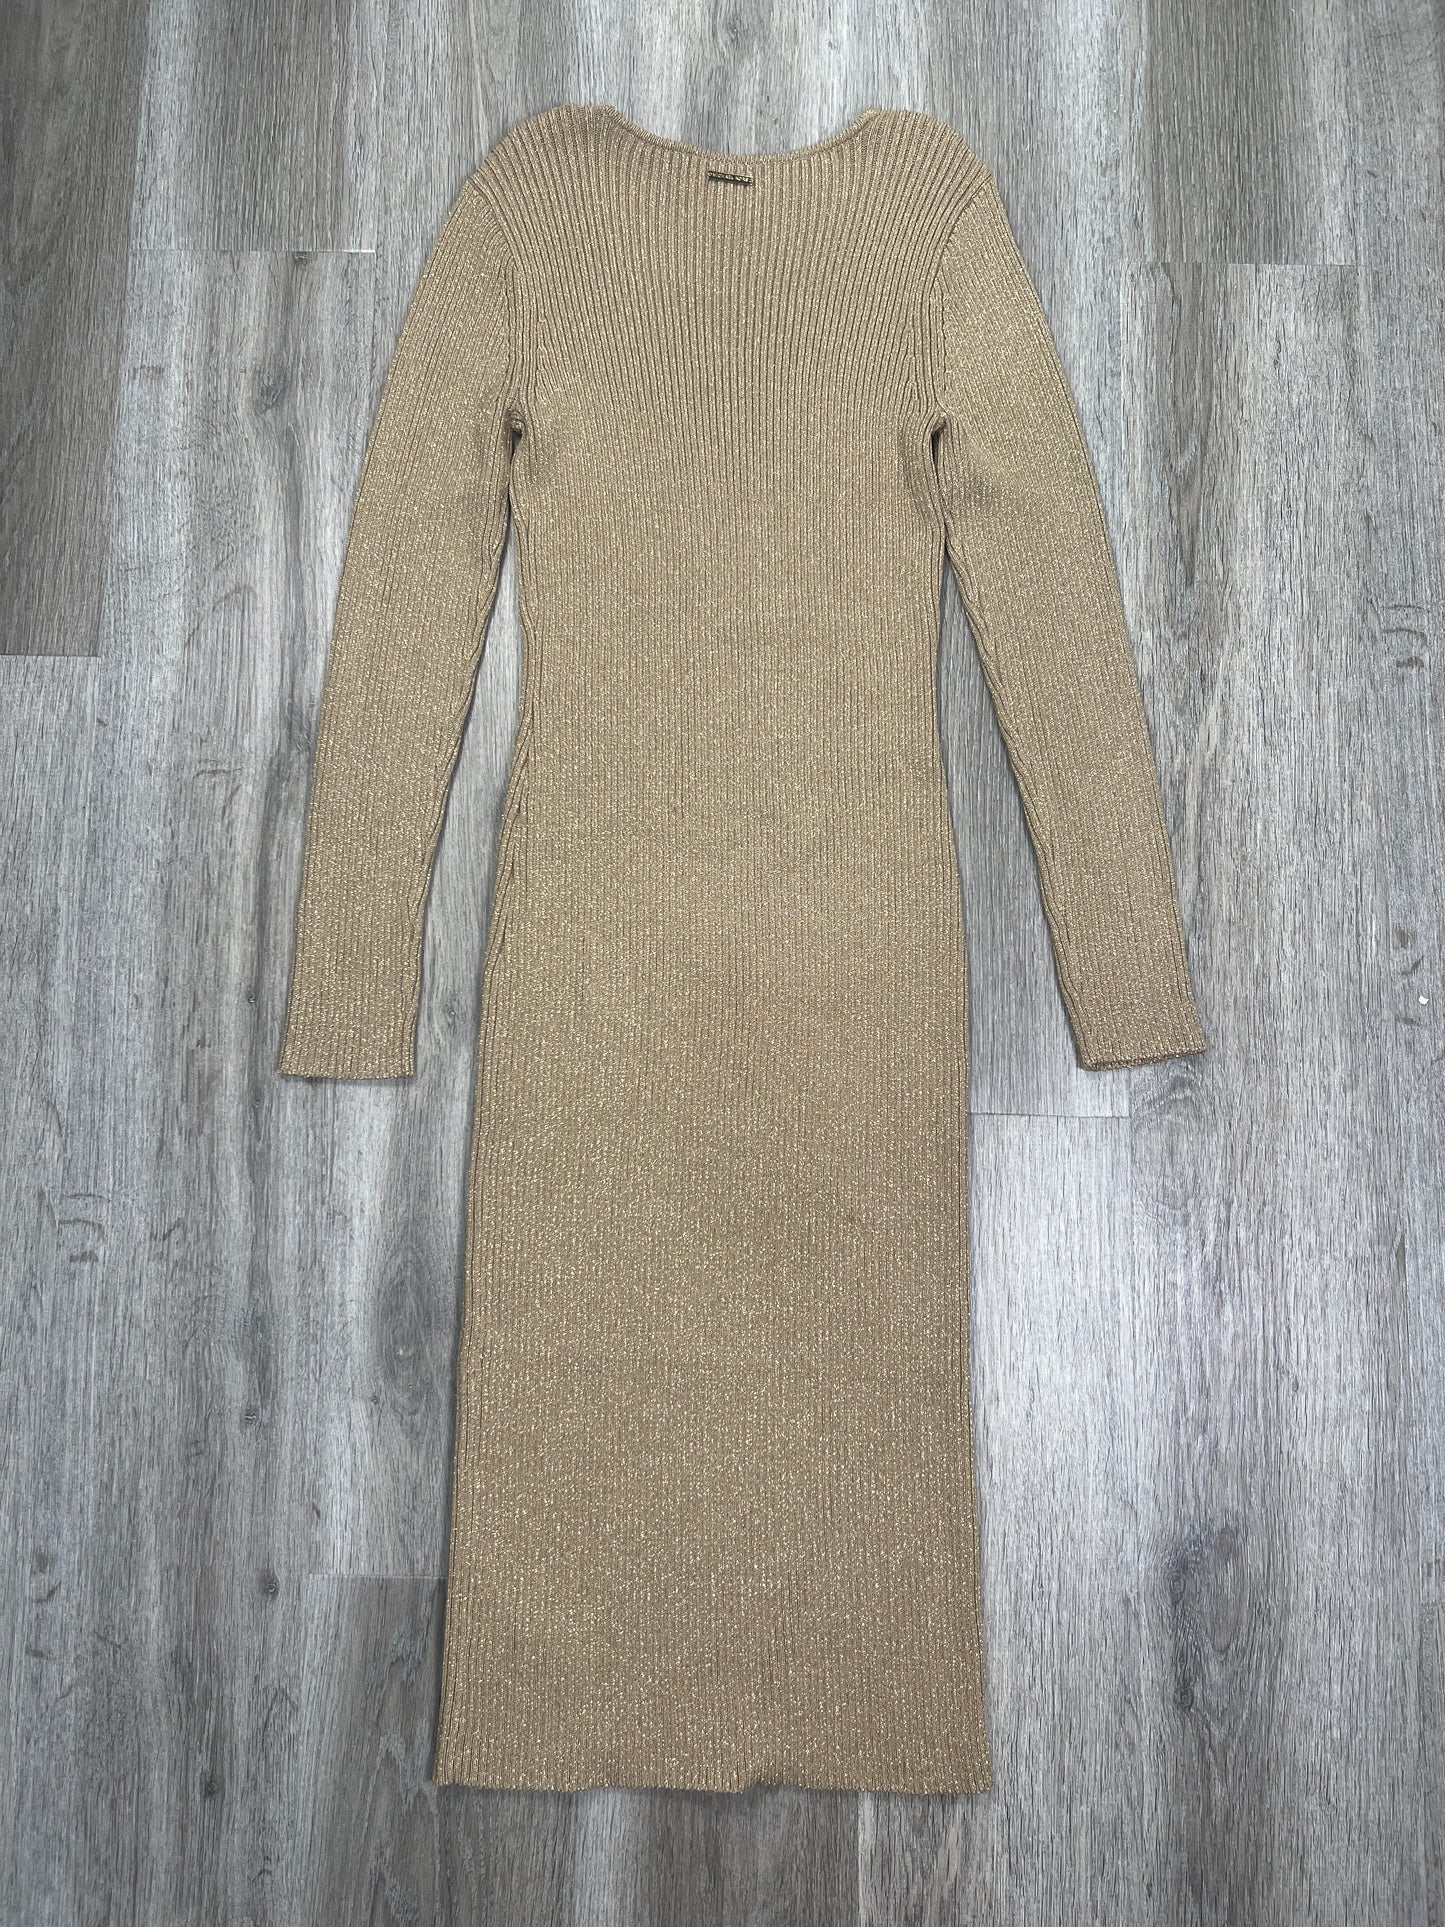 Dress Sweater By Michael By Michael Kors  Size: M